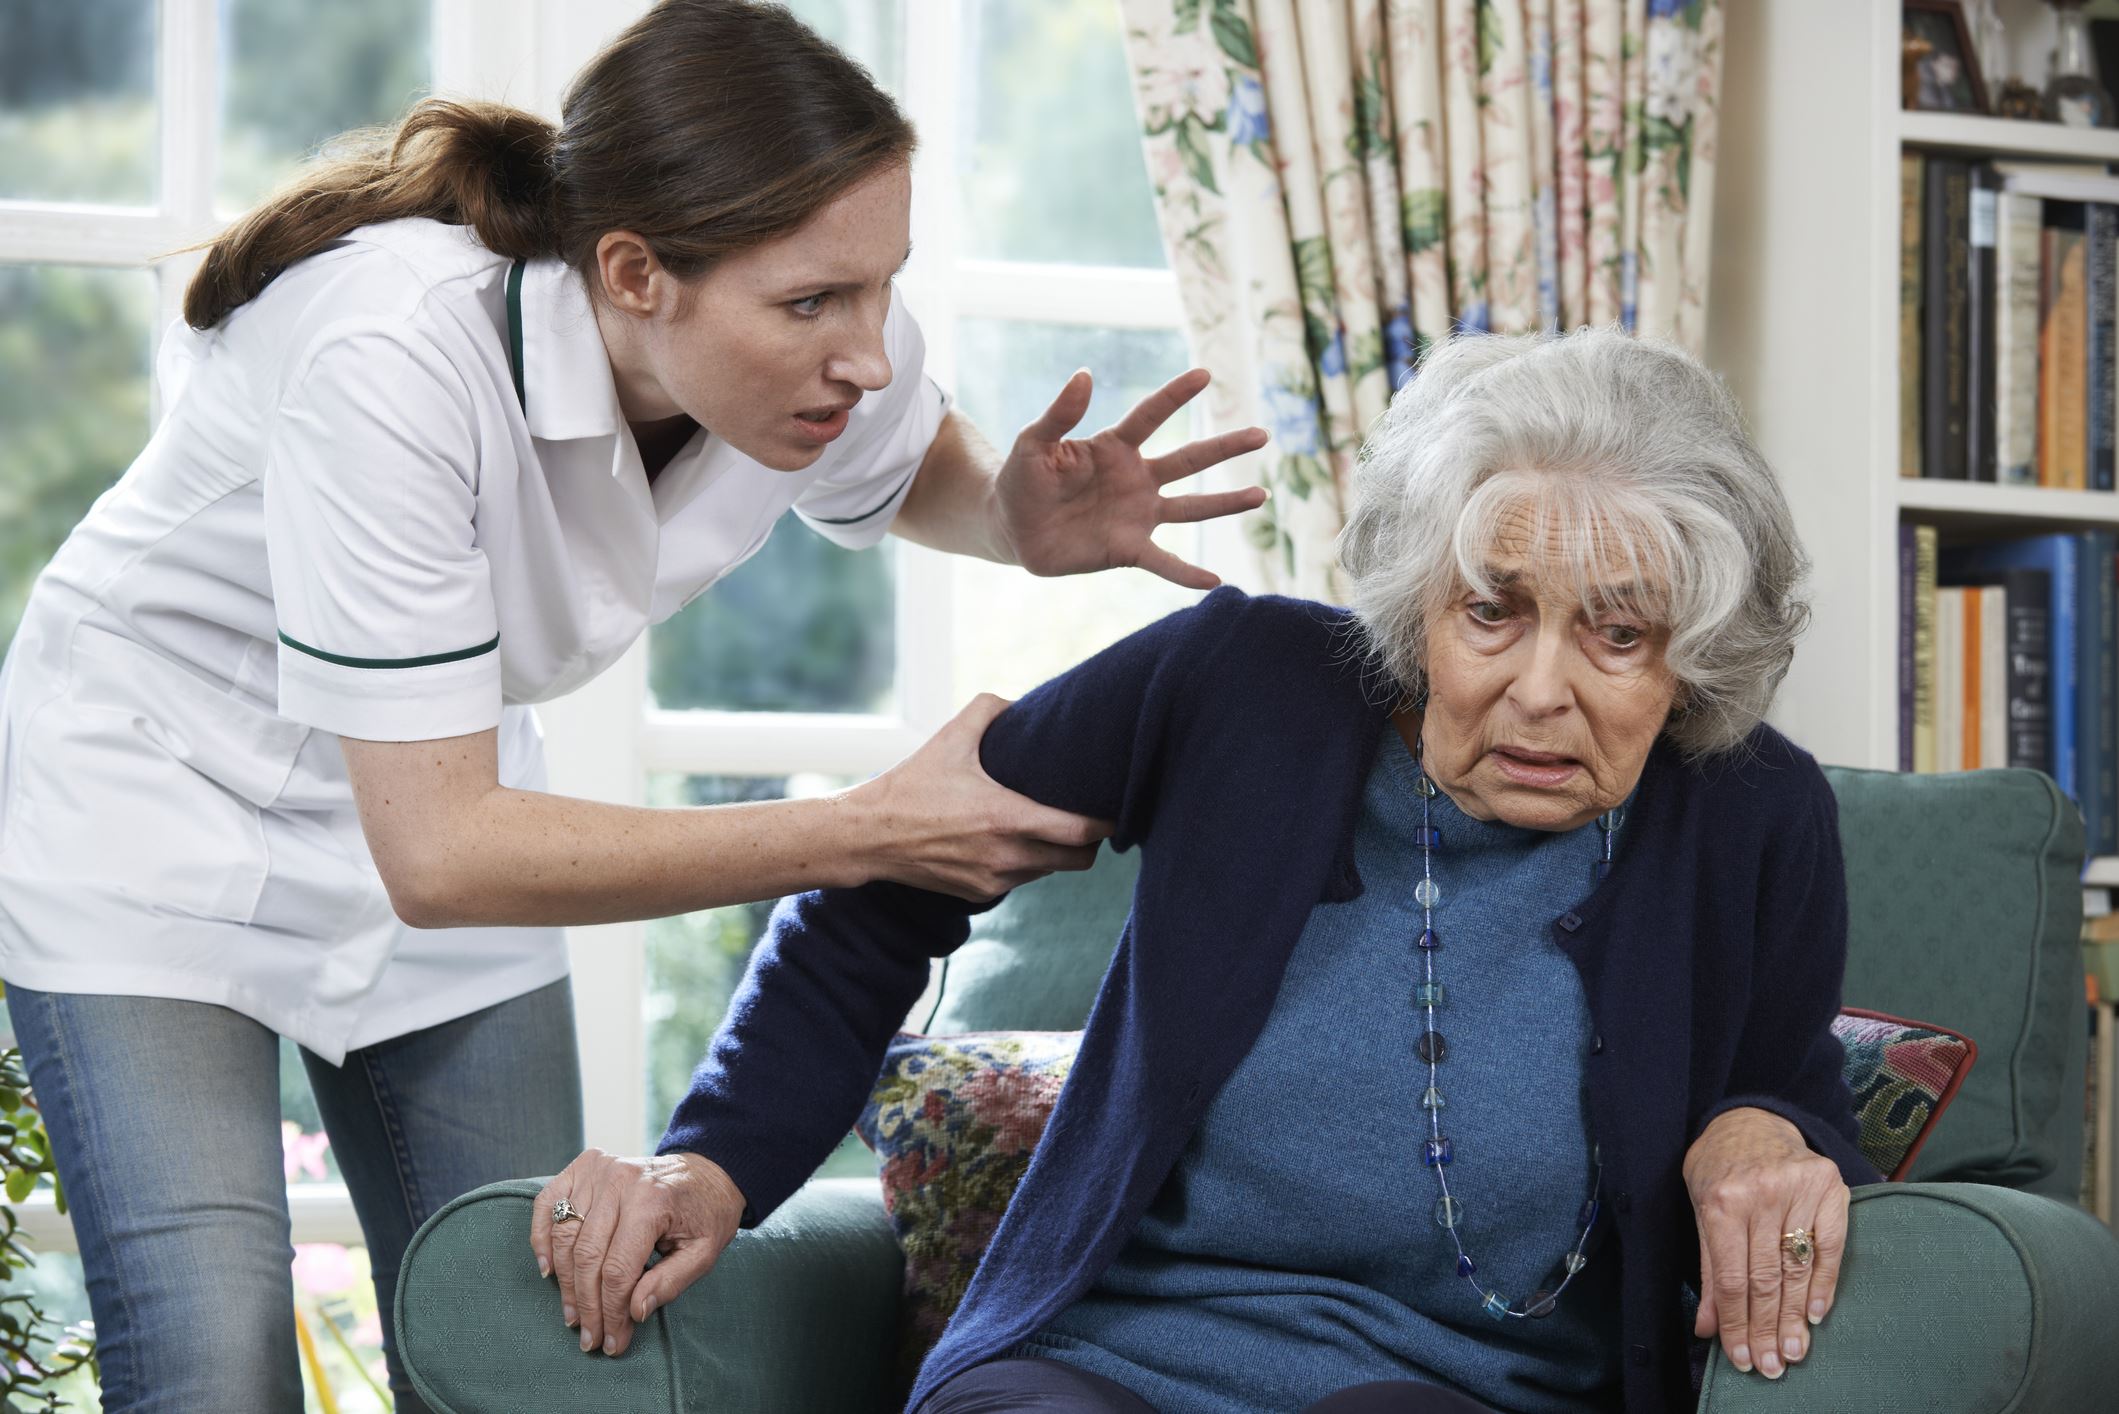 Types of Nursing Home Abuse